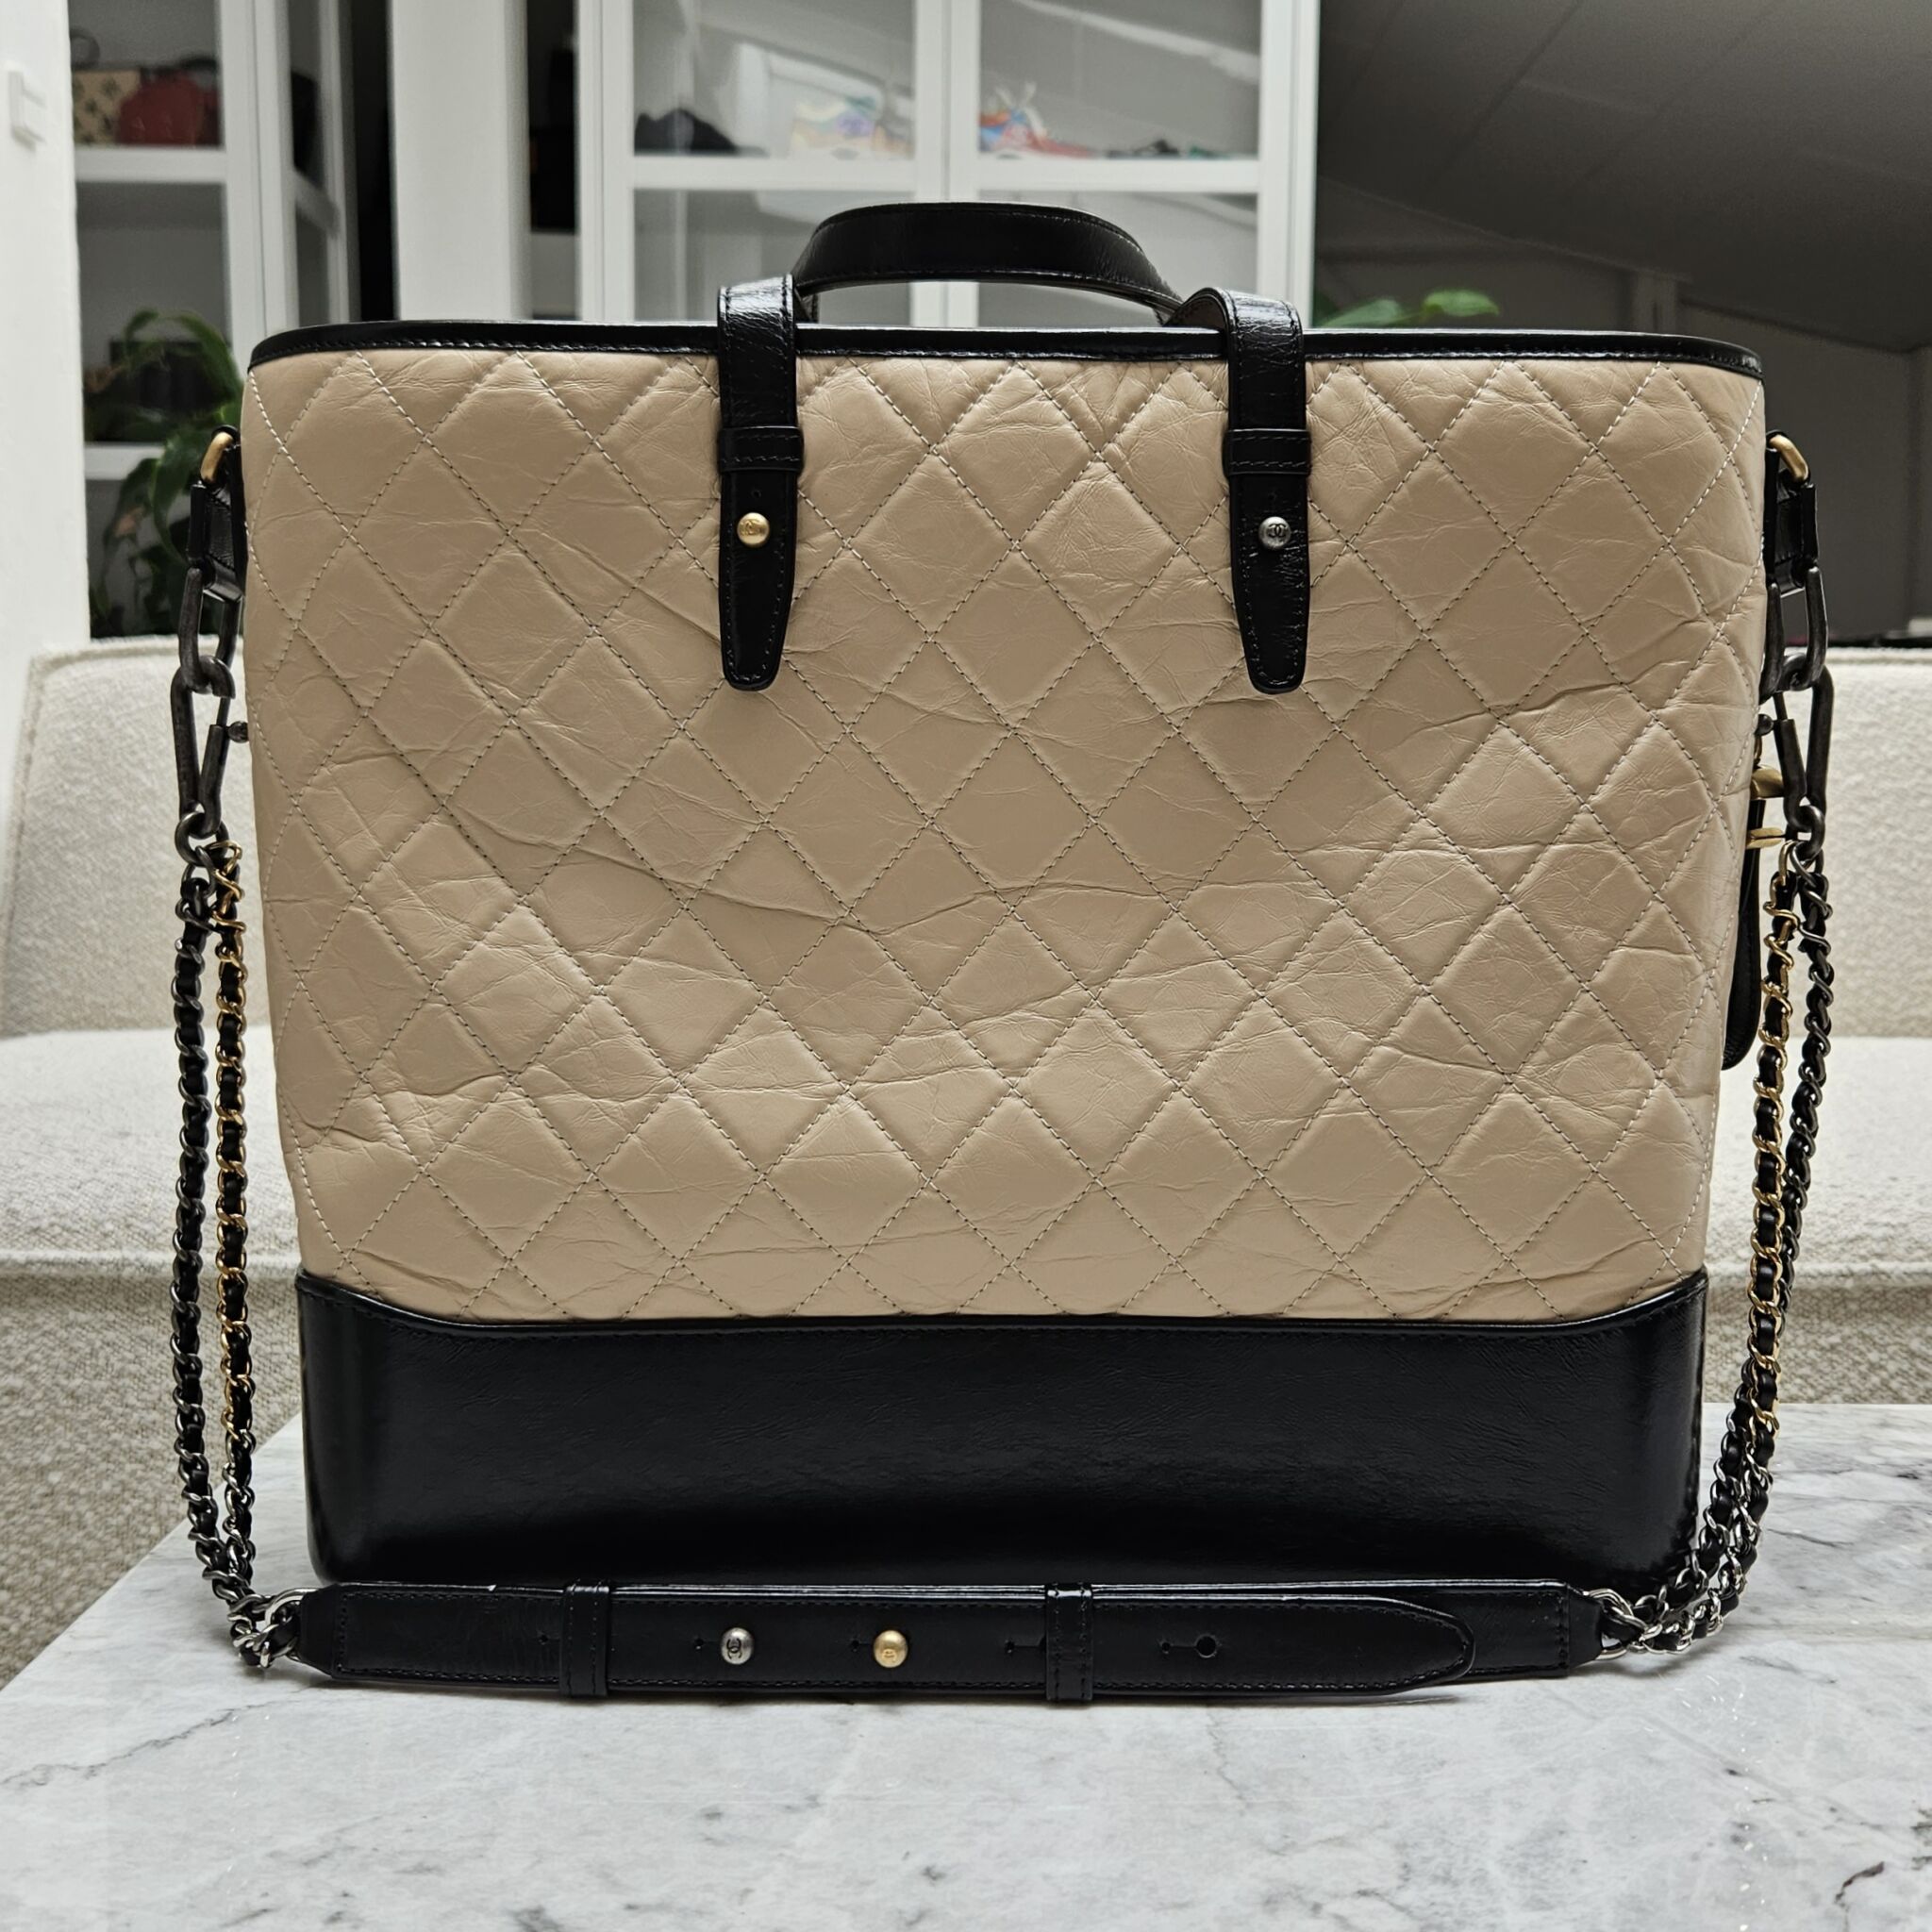 Chanel Large Gabrielle Shopper, Beige/Black - Laulay Luxury